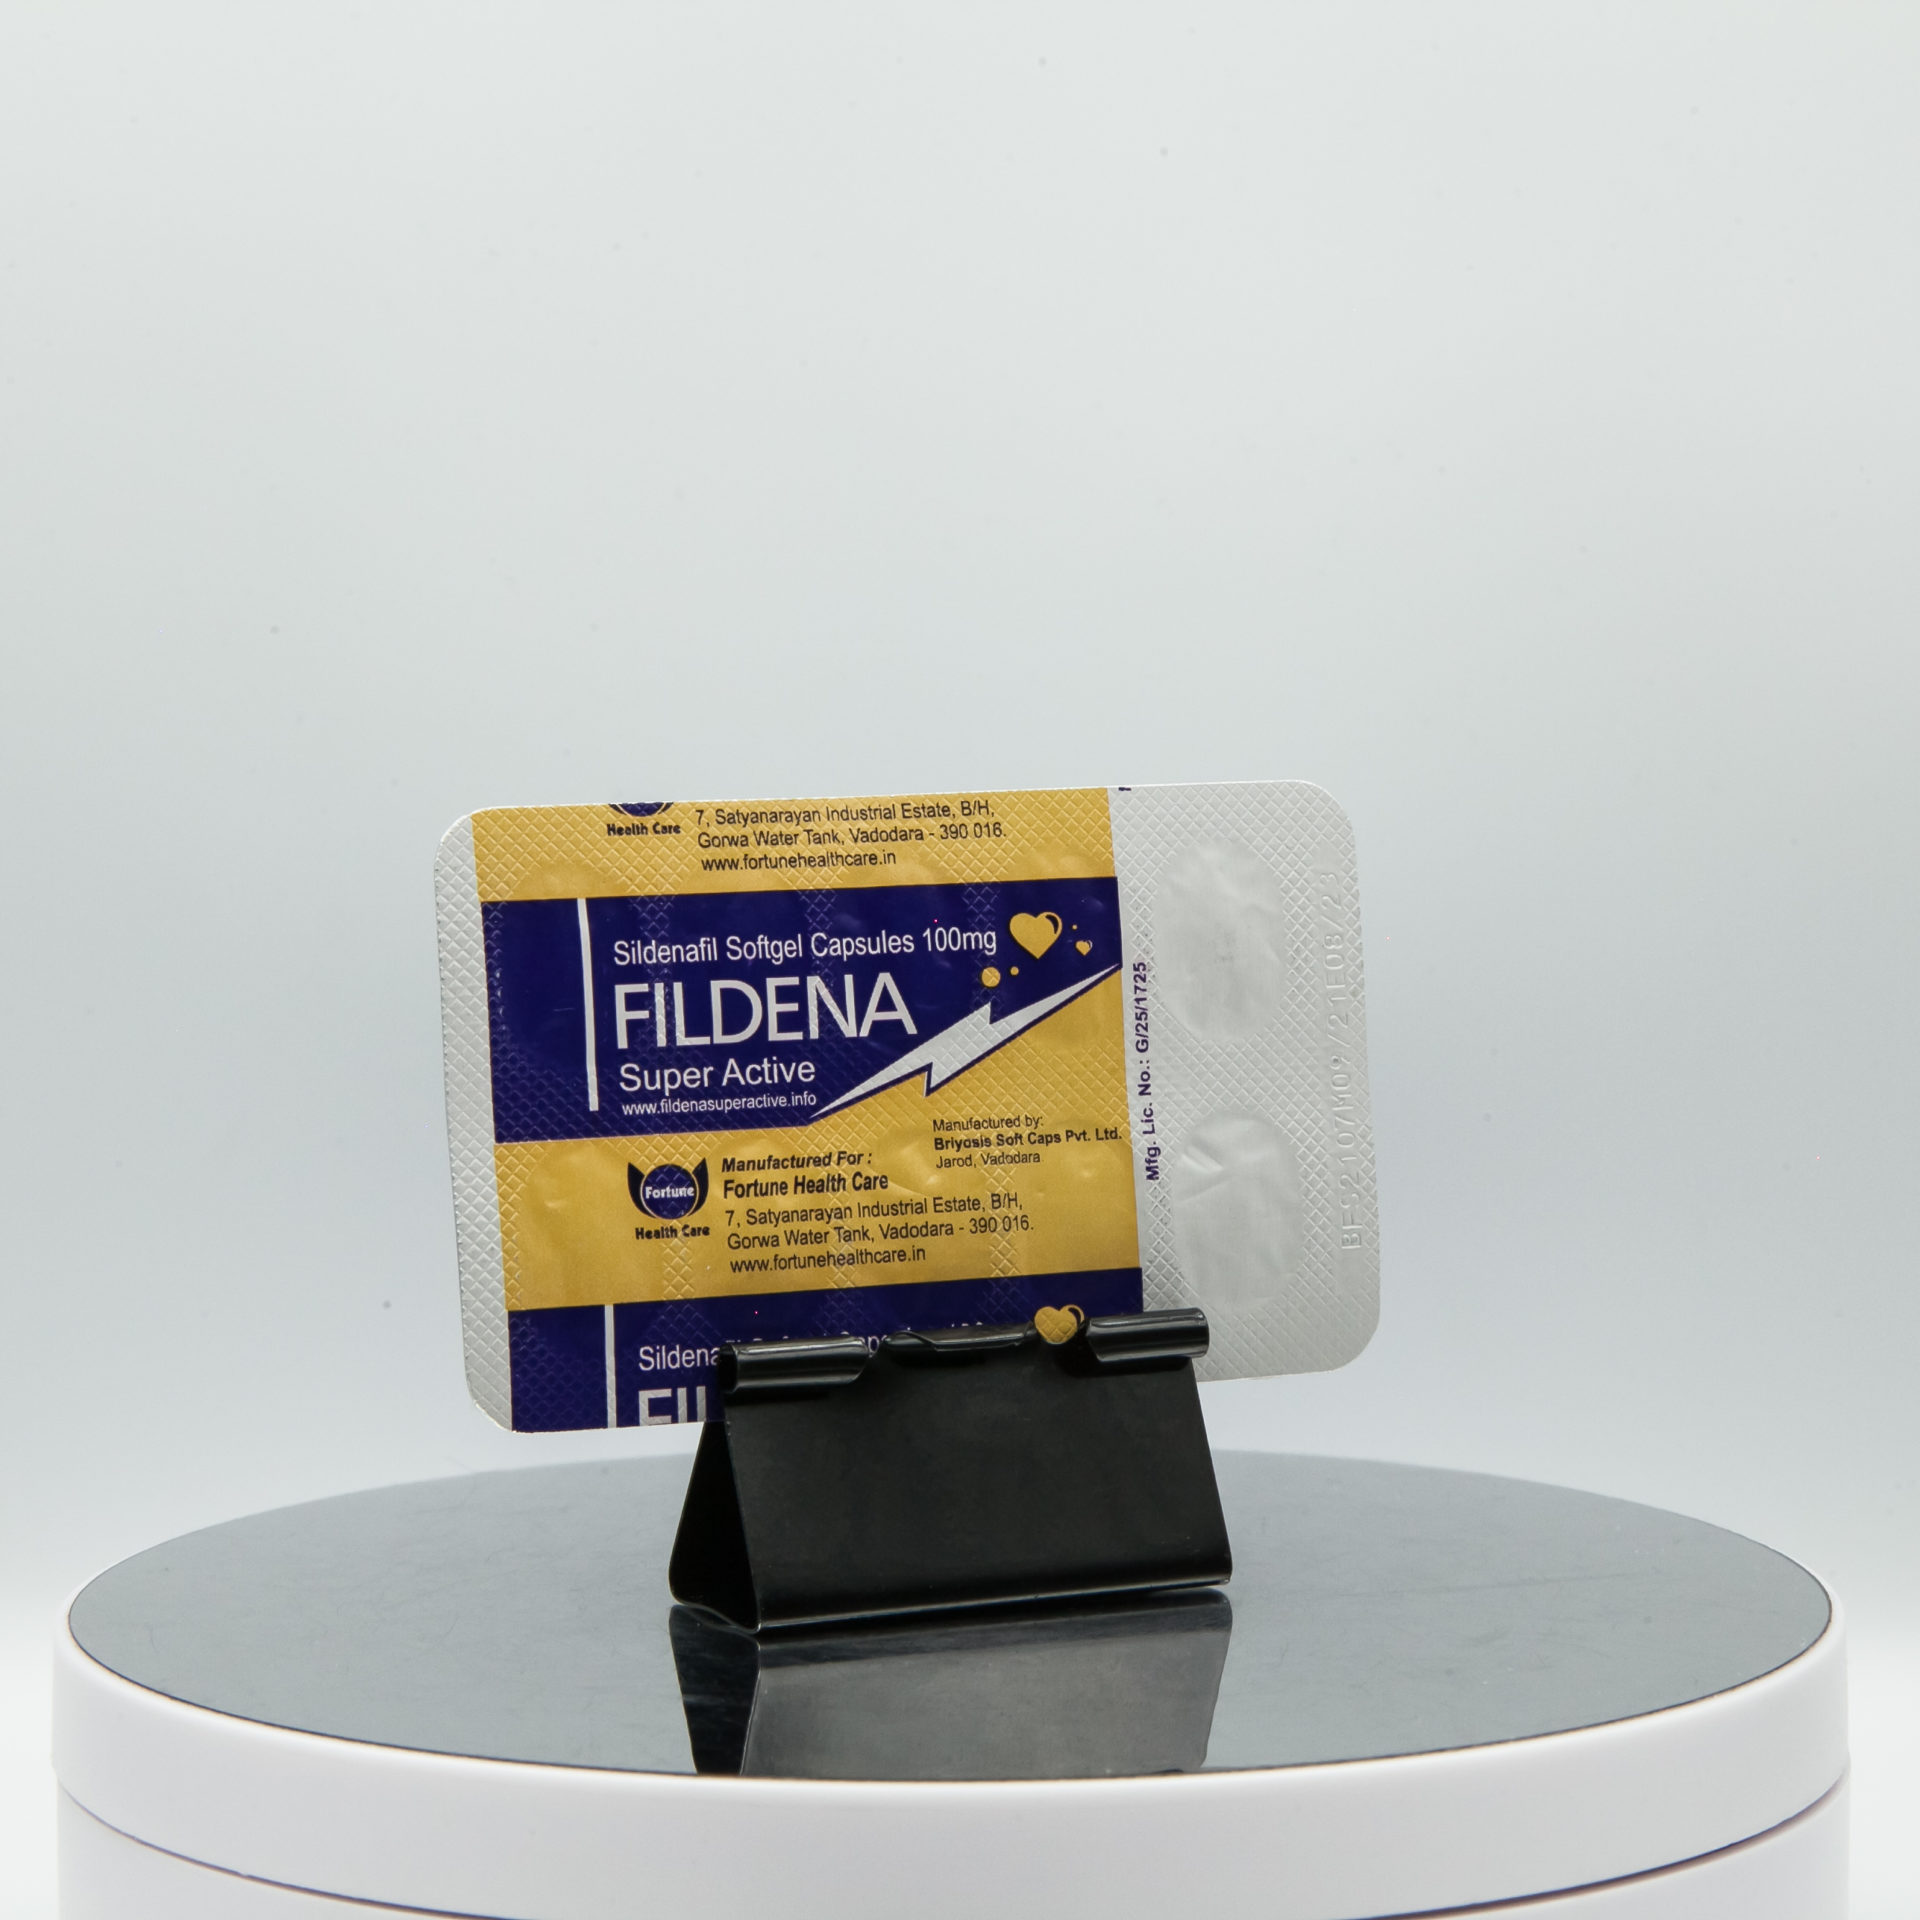 Fildena Super Active 100 mg Fortune Health Care Sildenafil Citrate (Viagra generic) 3